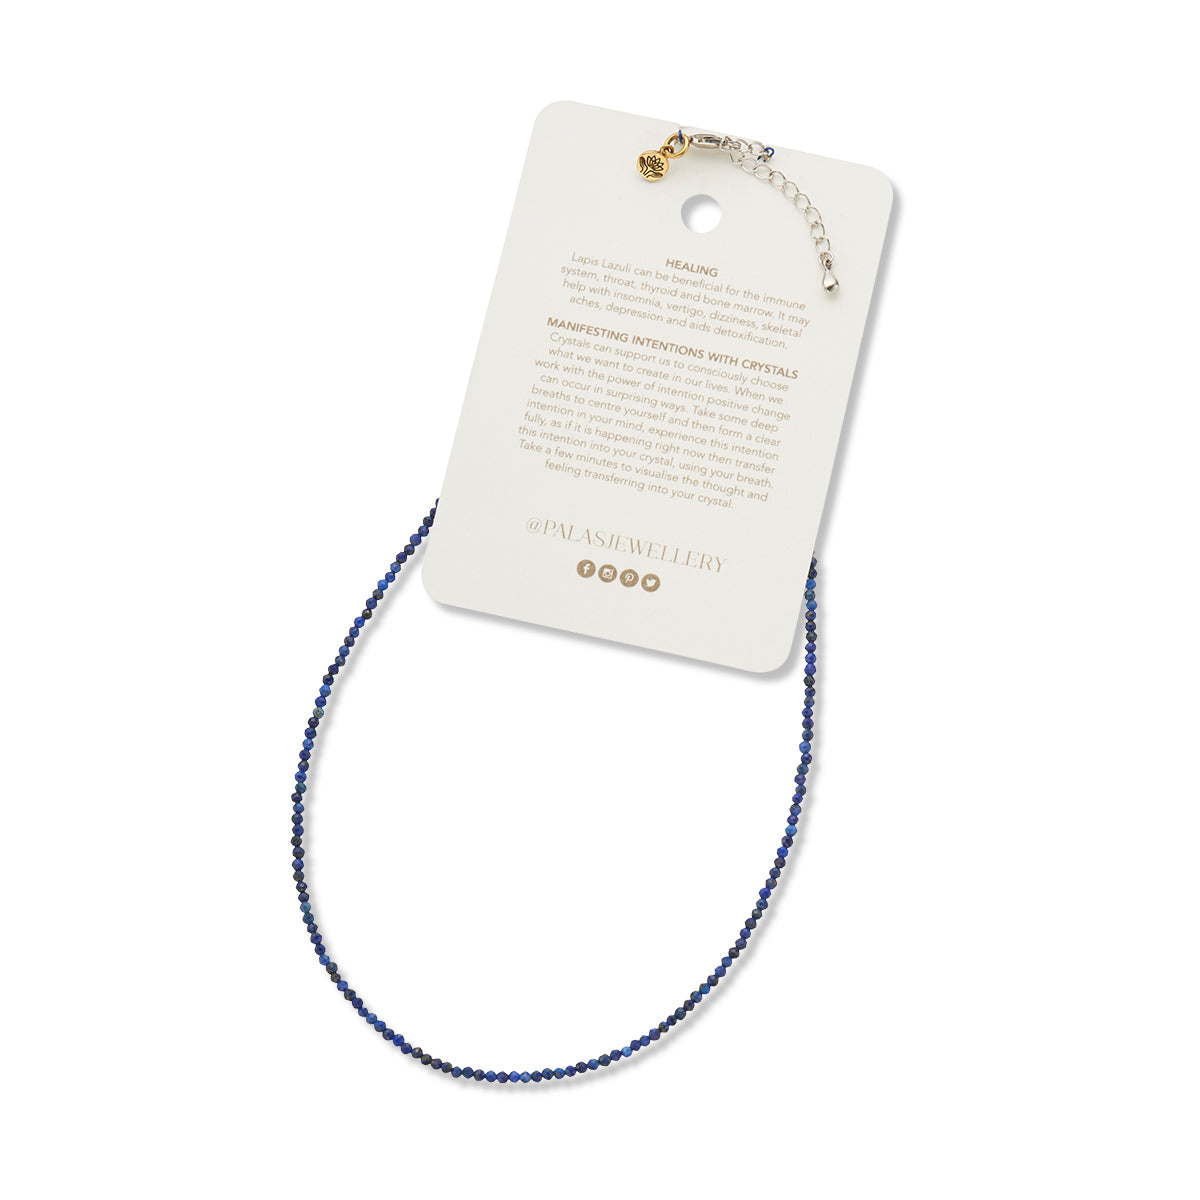 Lapis Lazuli empower gem necklace